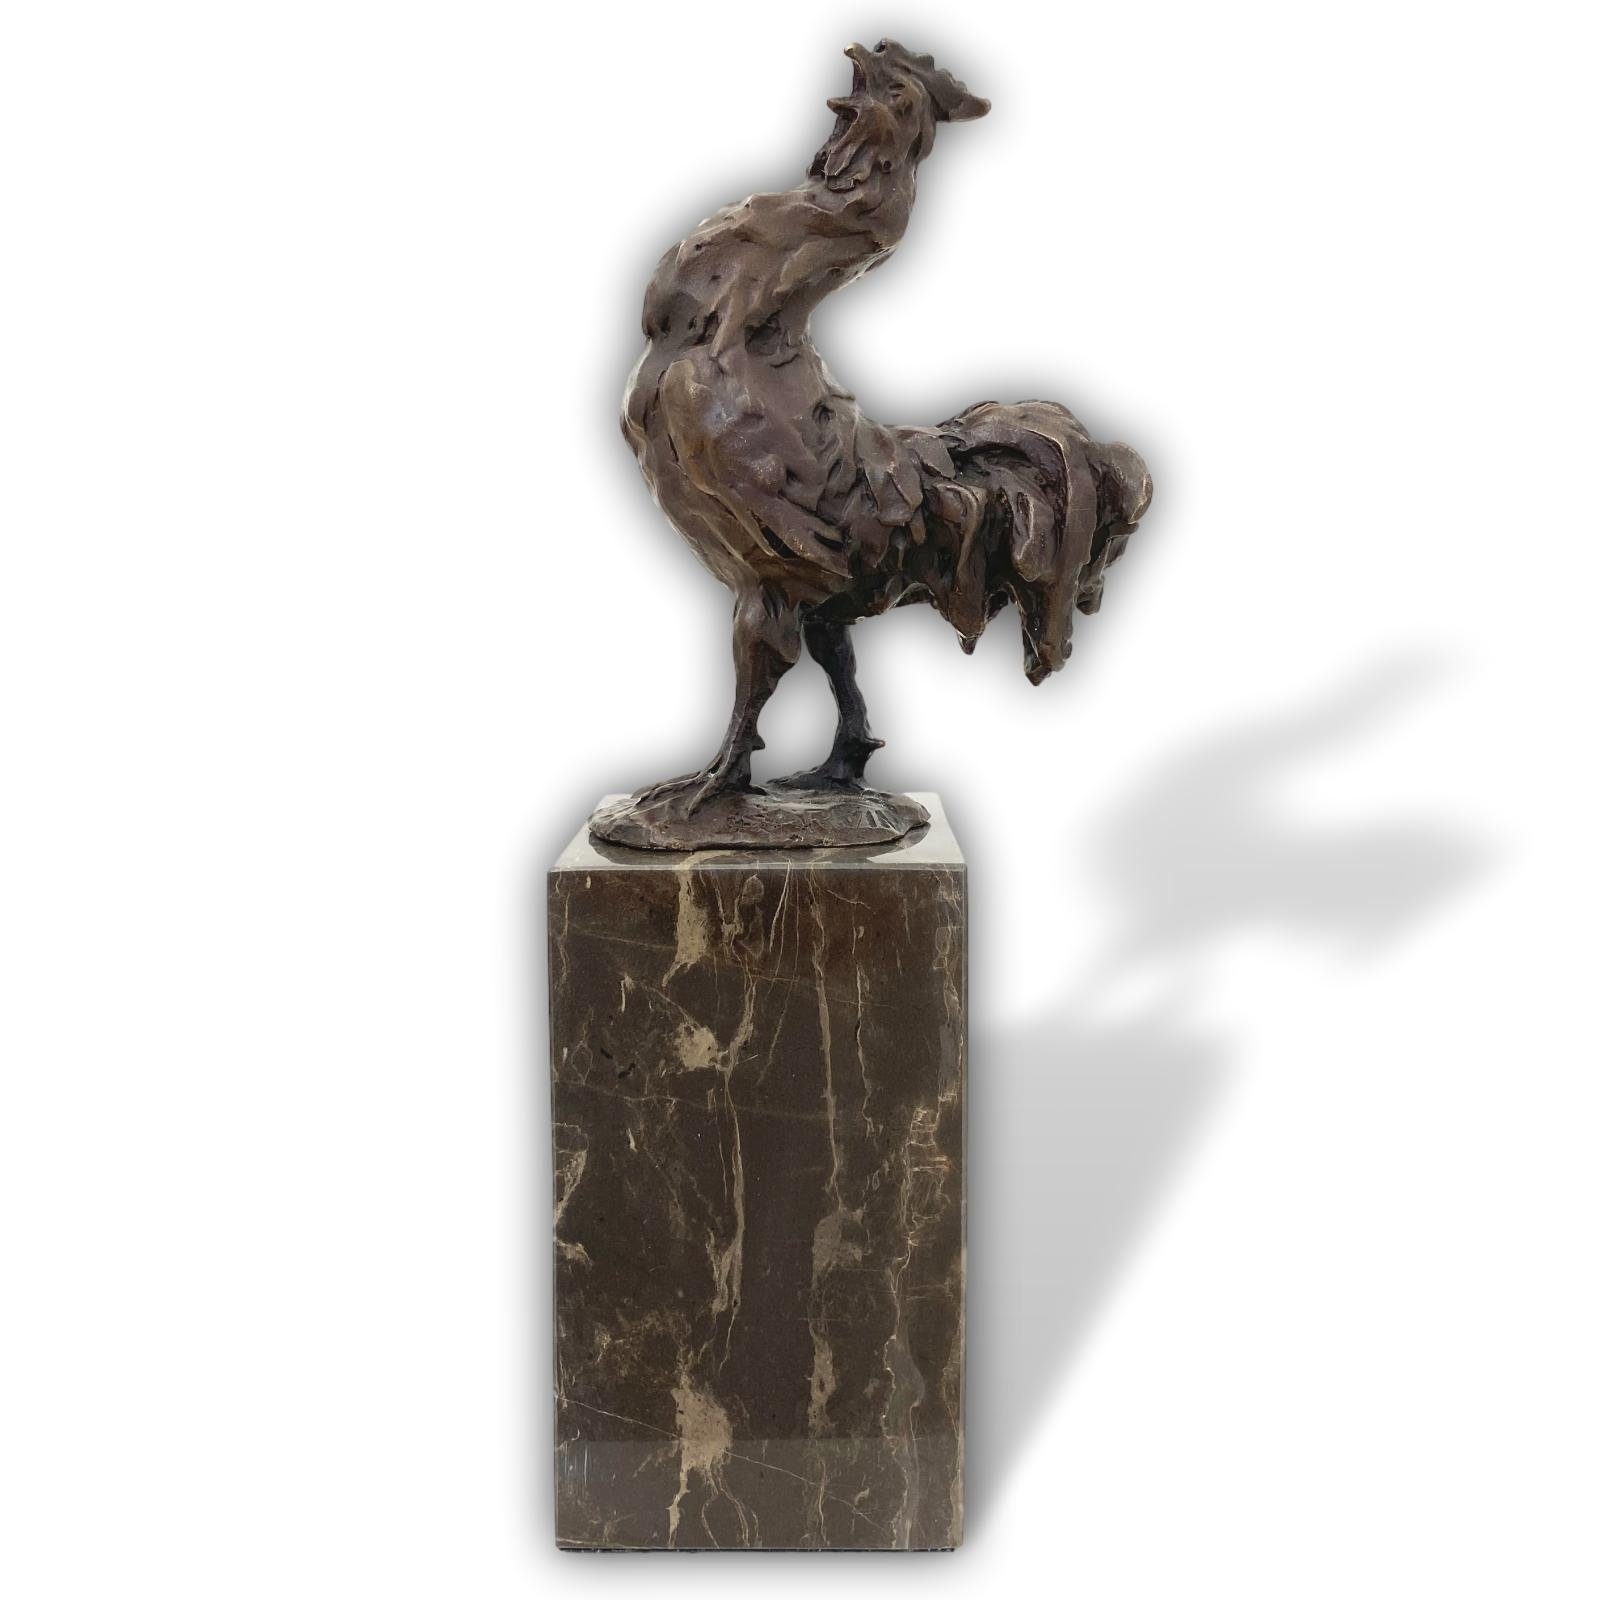 Aubaho Skulptur Bronzeskulptur Hahn Repli Antik-Stil Figur Bronze Carvin nach Skulptur